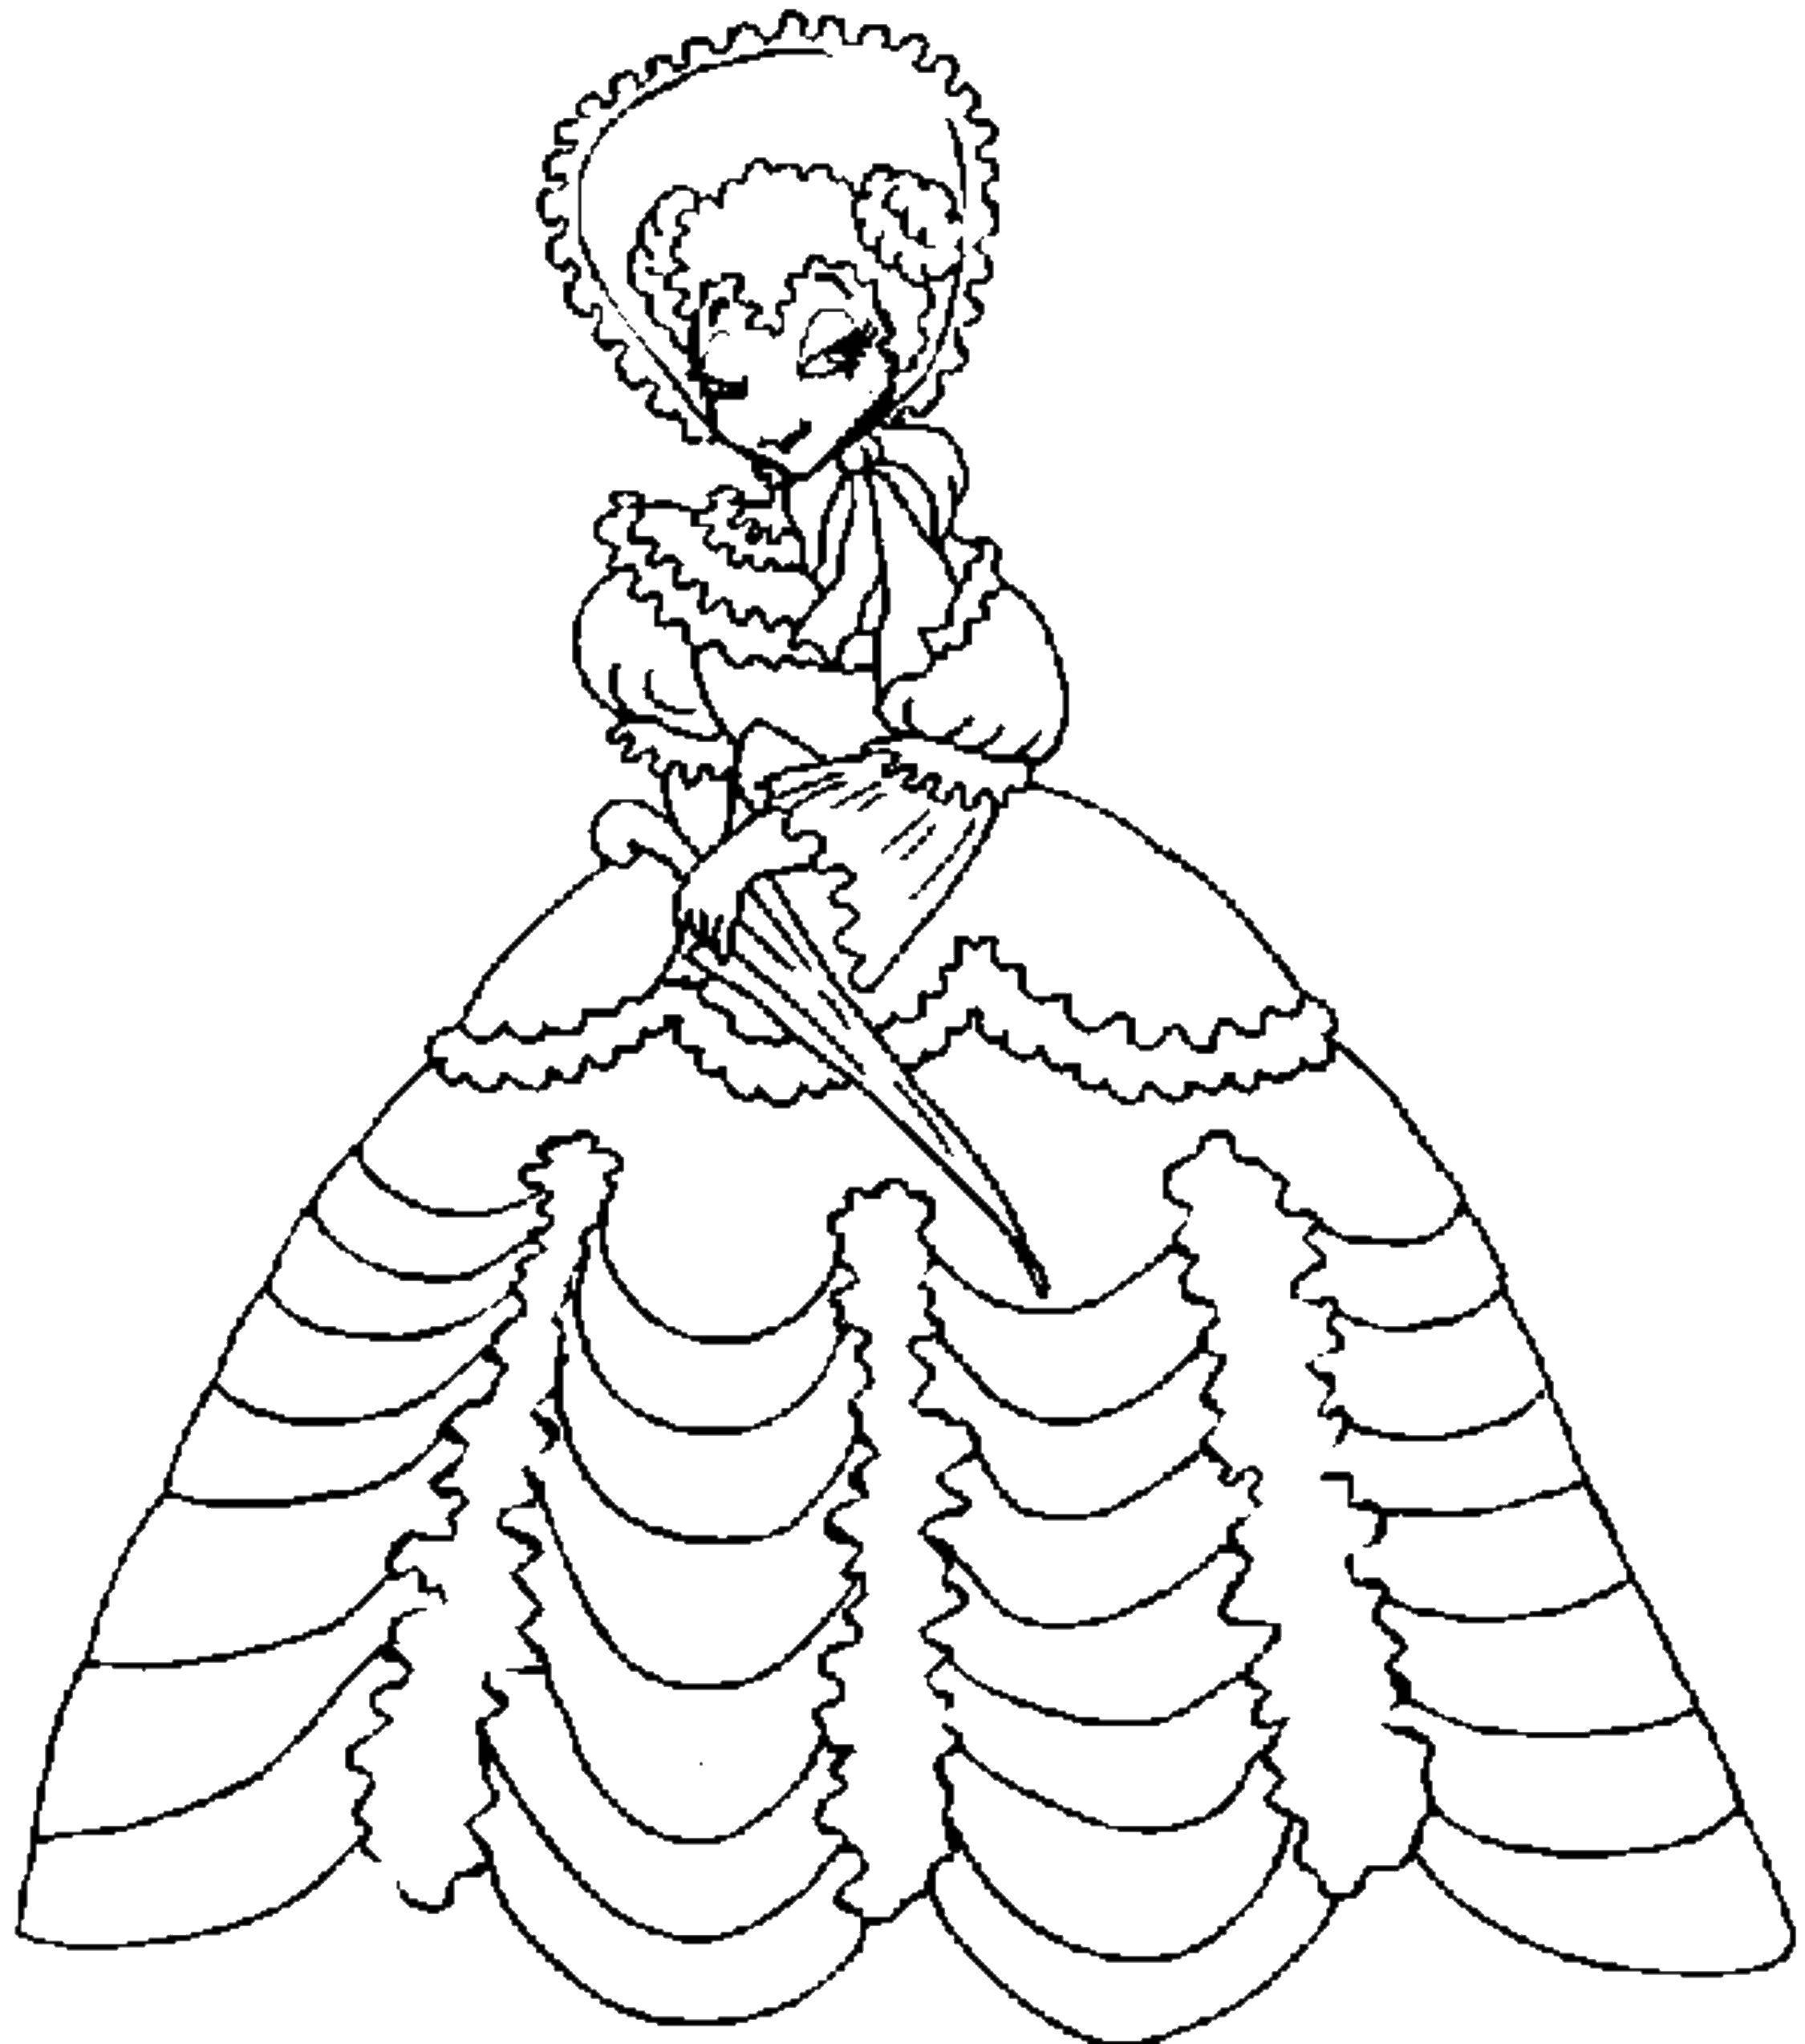 Coloring Ball gown.. Category Princess. Tags:  Princess dress.